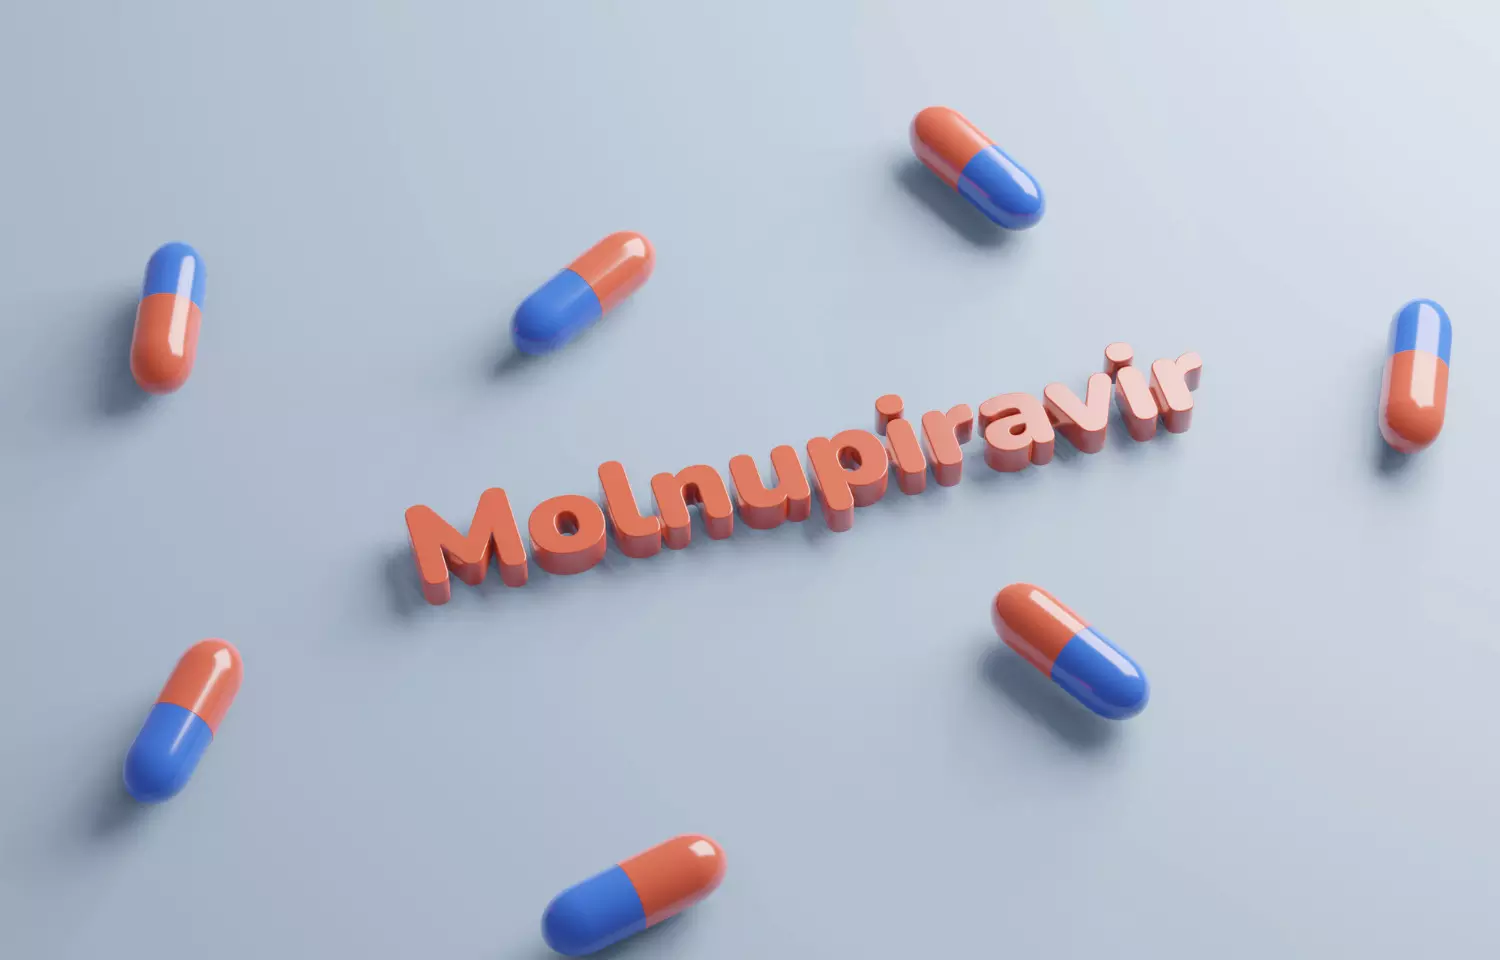 Merck Molnupiravir under review amid rising COVID cases, new variant in US